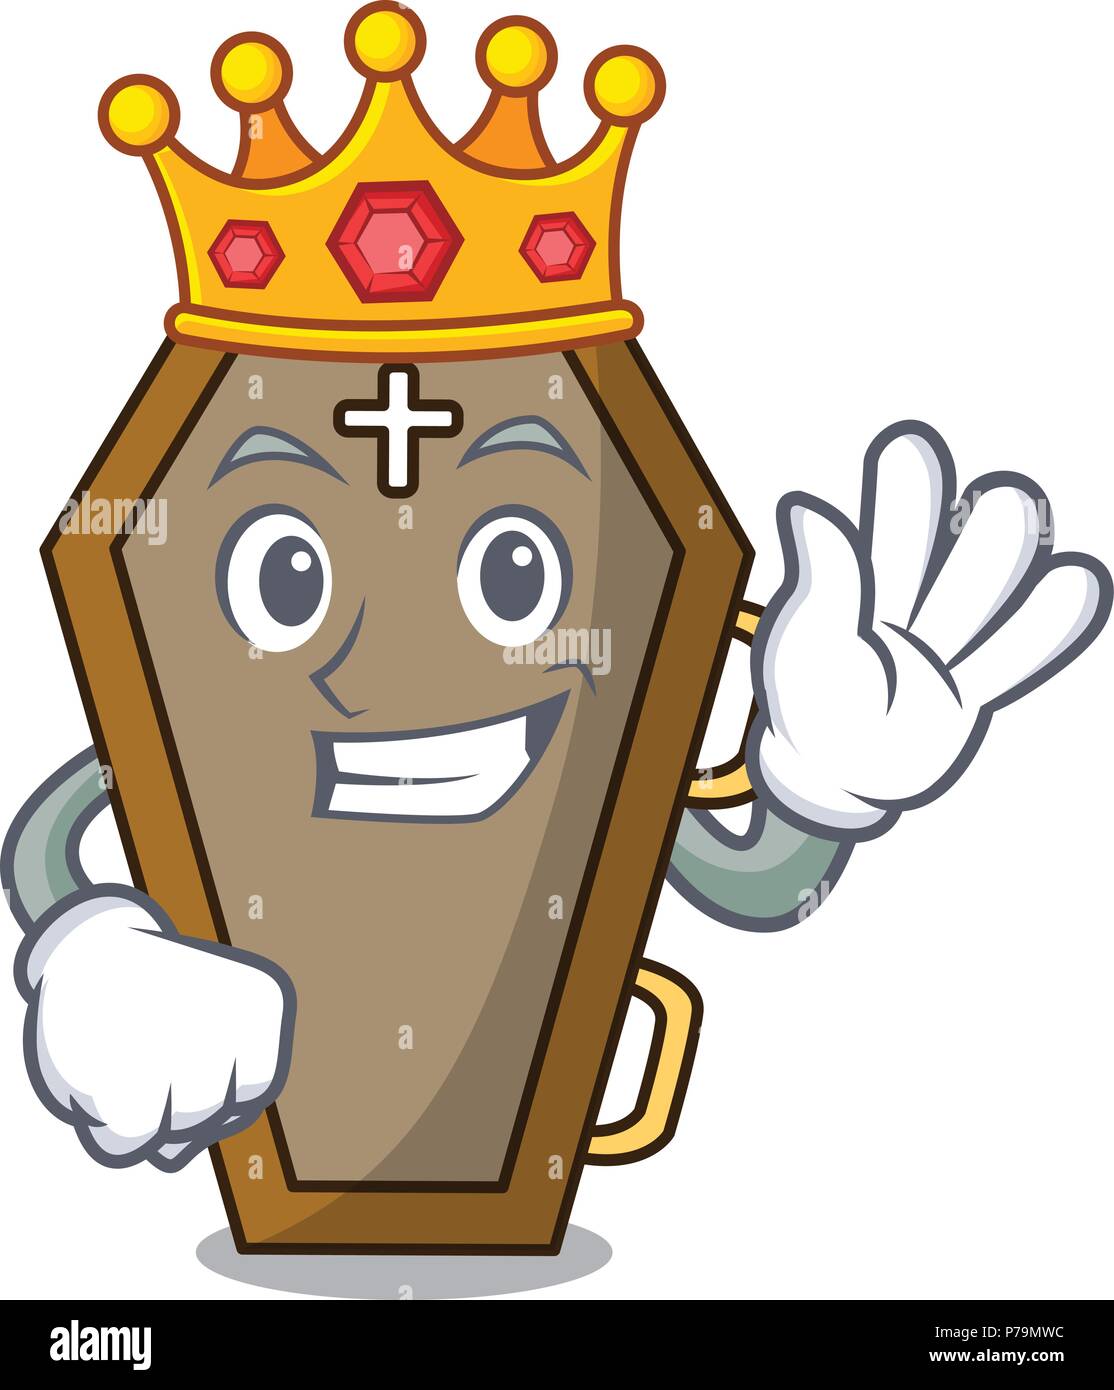 King coffin mascot cartoon style Stock Vector